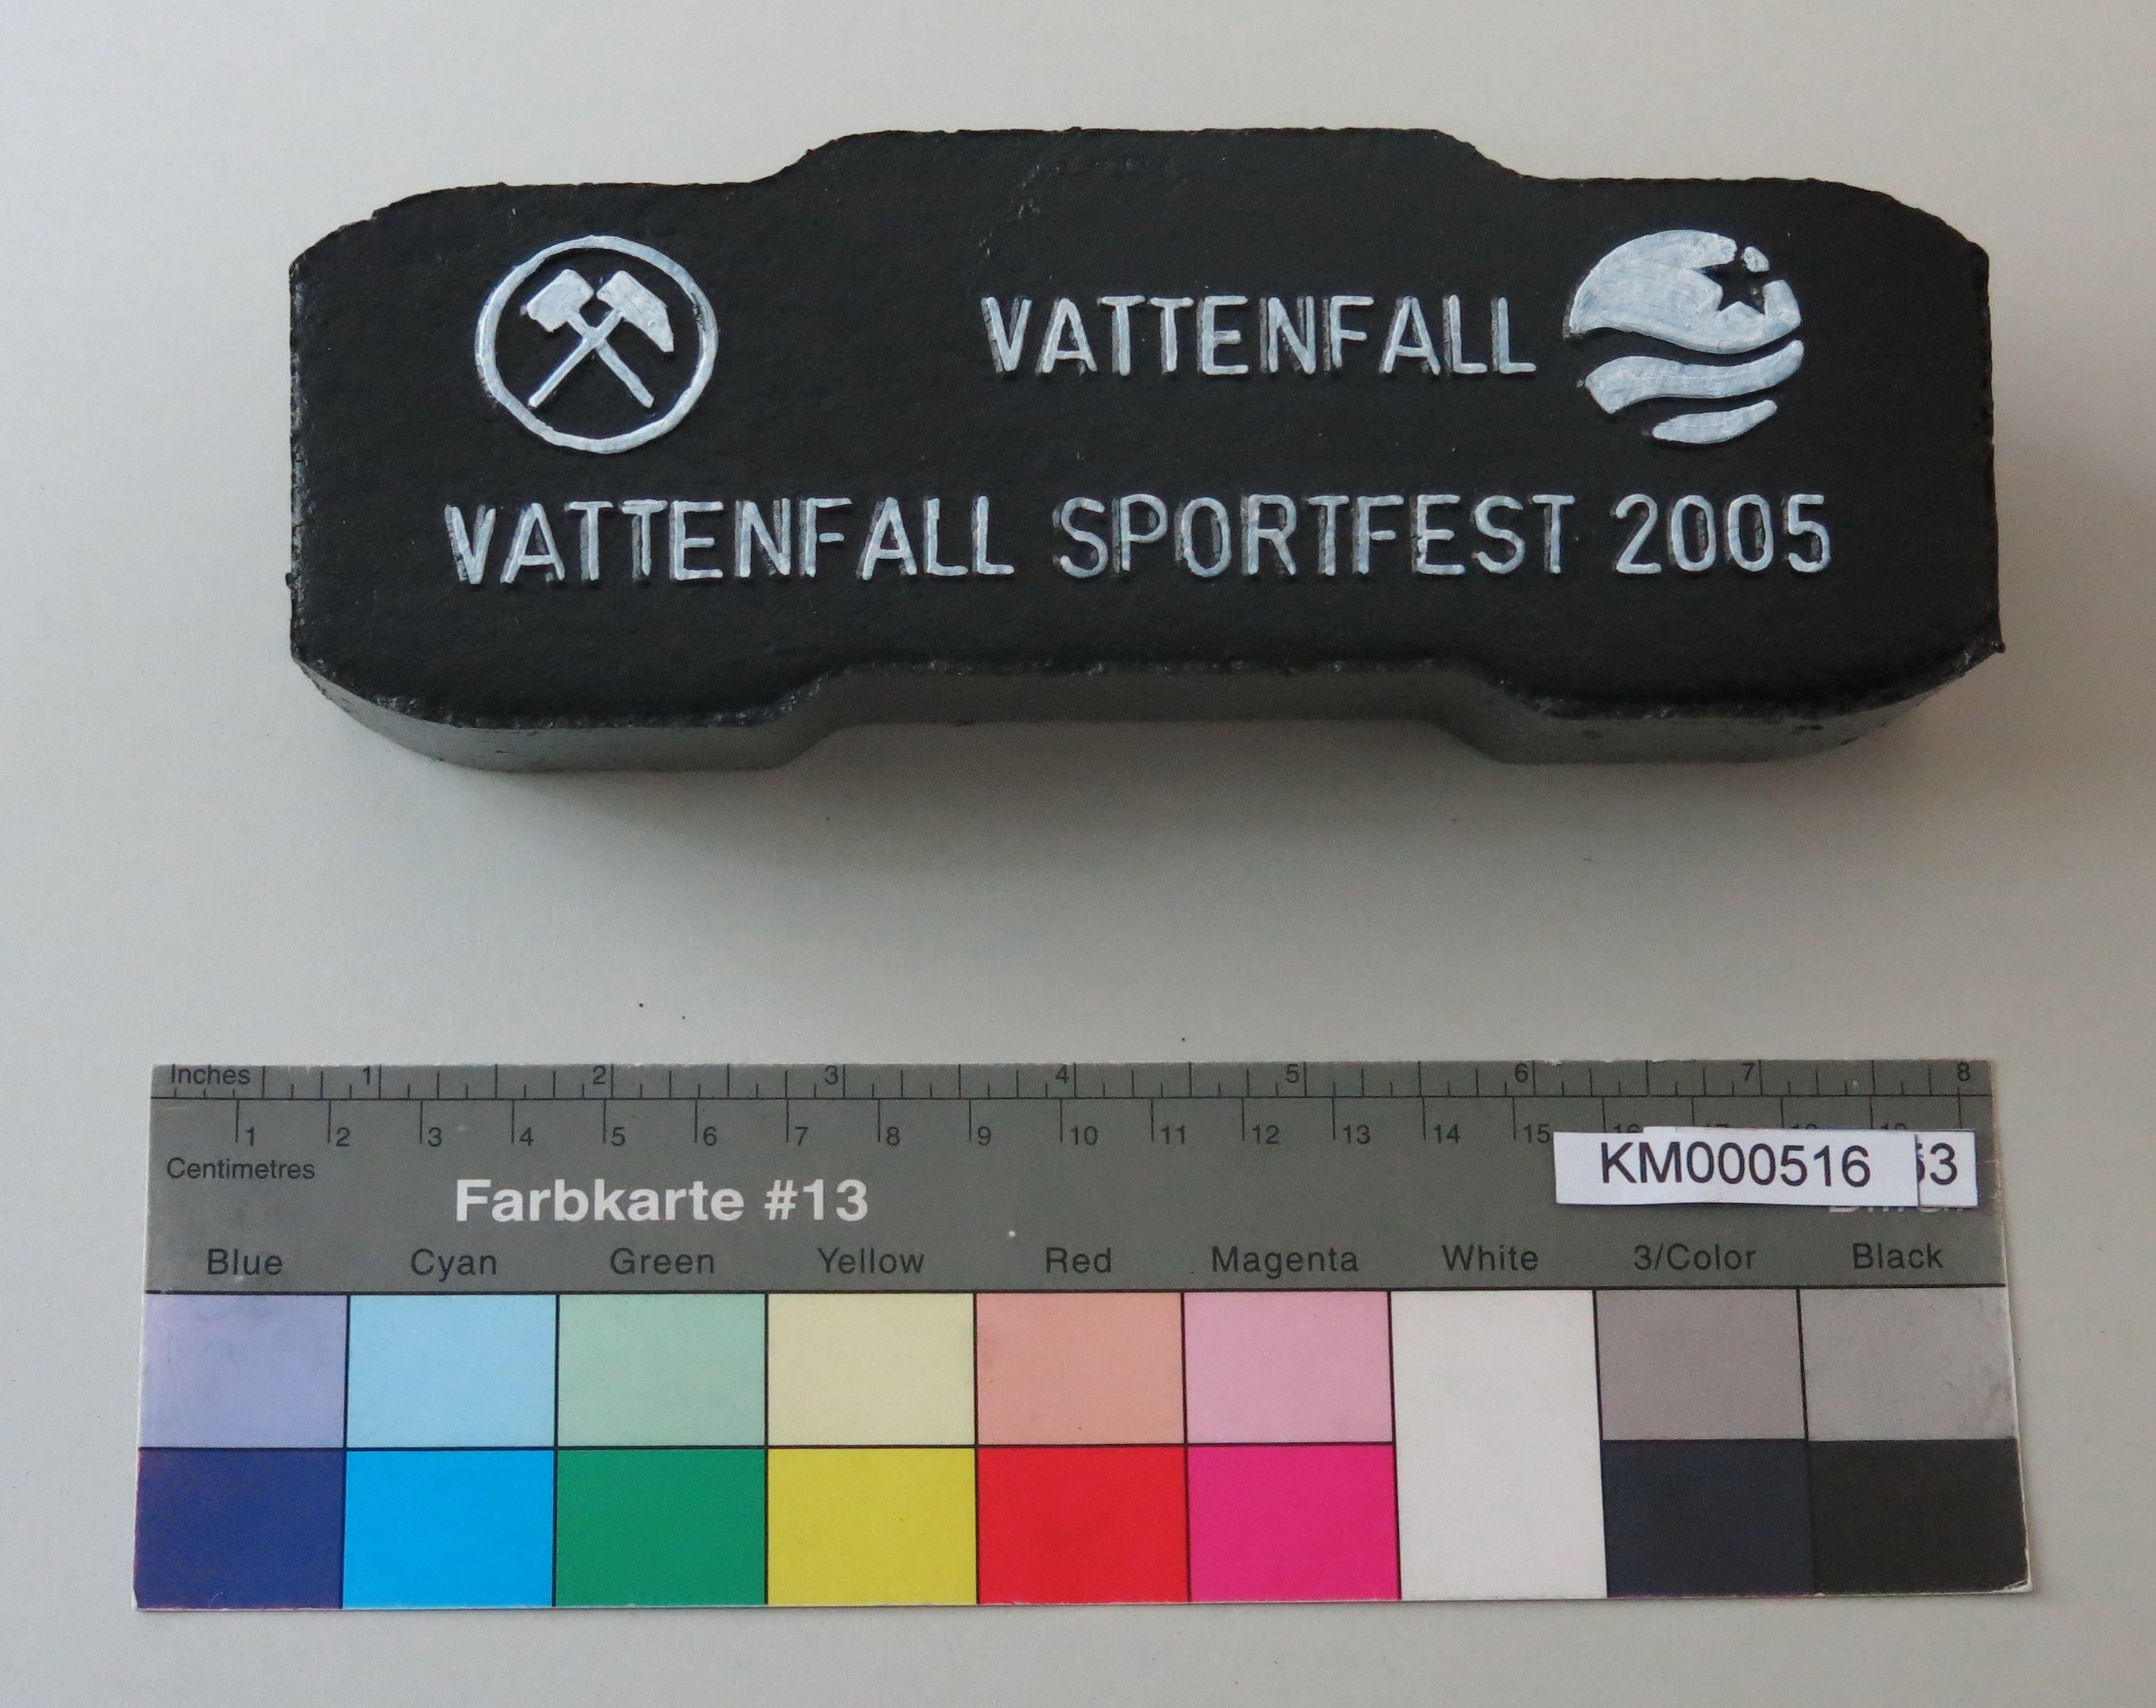 Zierbrikett "VATTENFALL VATTENFALL SPORTFEST 2005" (Energiefabrik Knappenrode CC BY-SA)